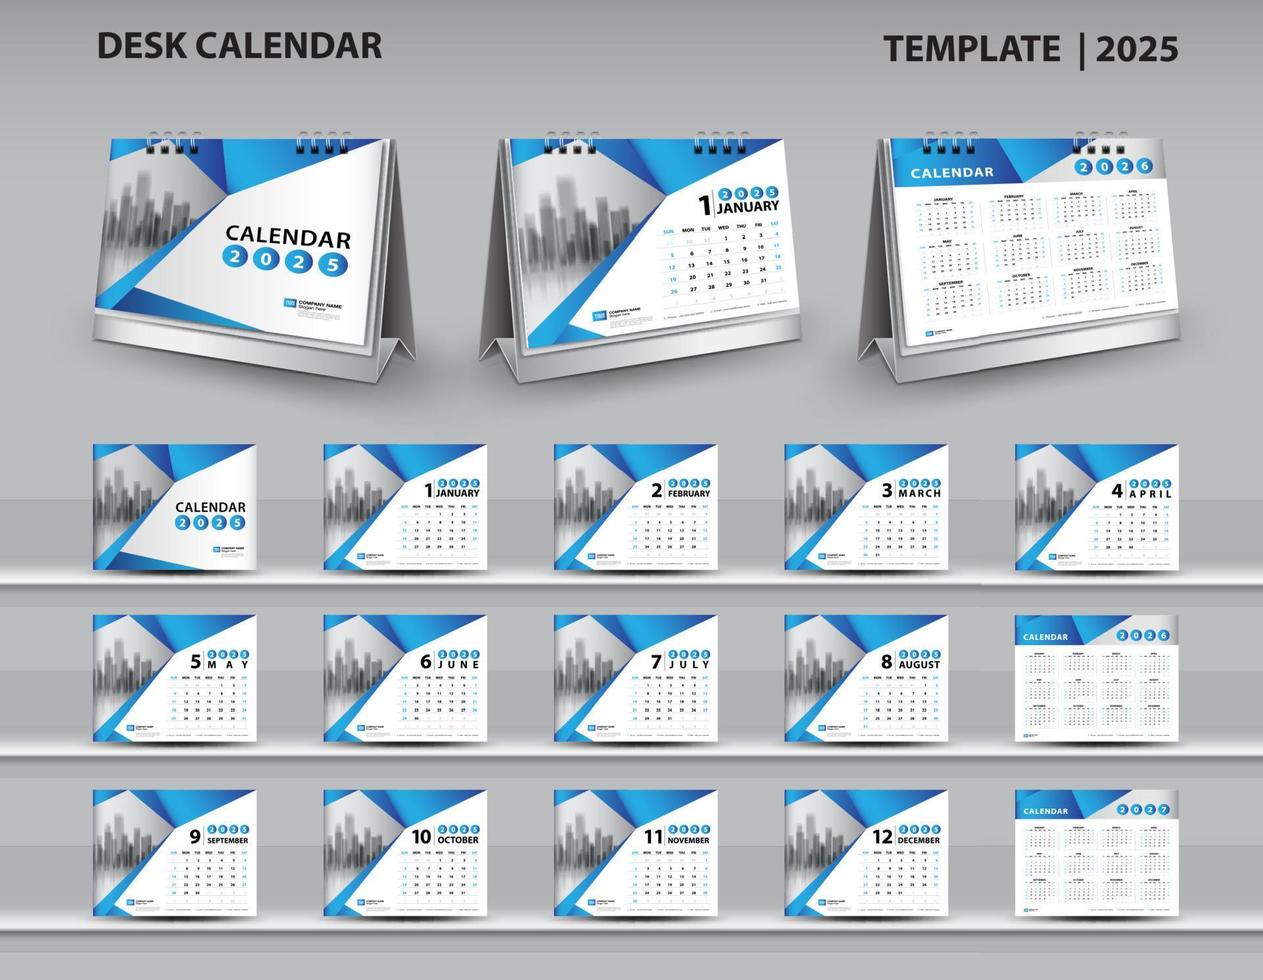 monthly-calendar-template-for-2025-year-week-starts-on-sunday-minimalist-style-desk-calendar